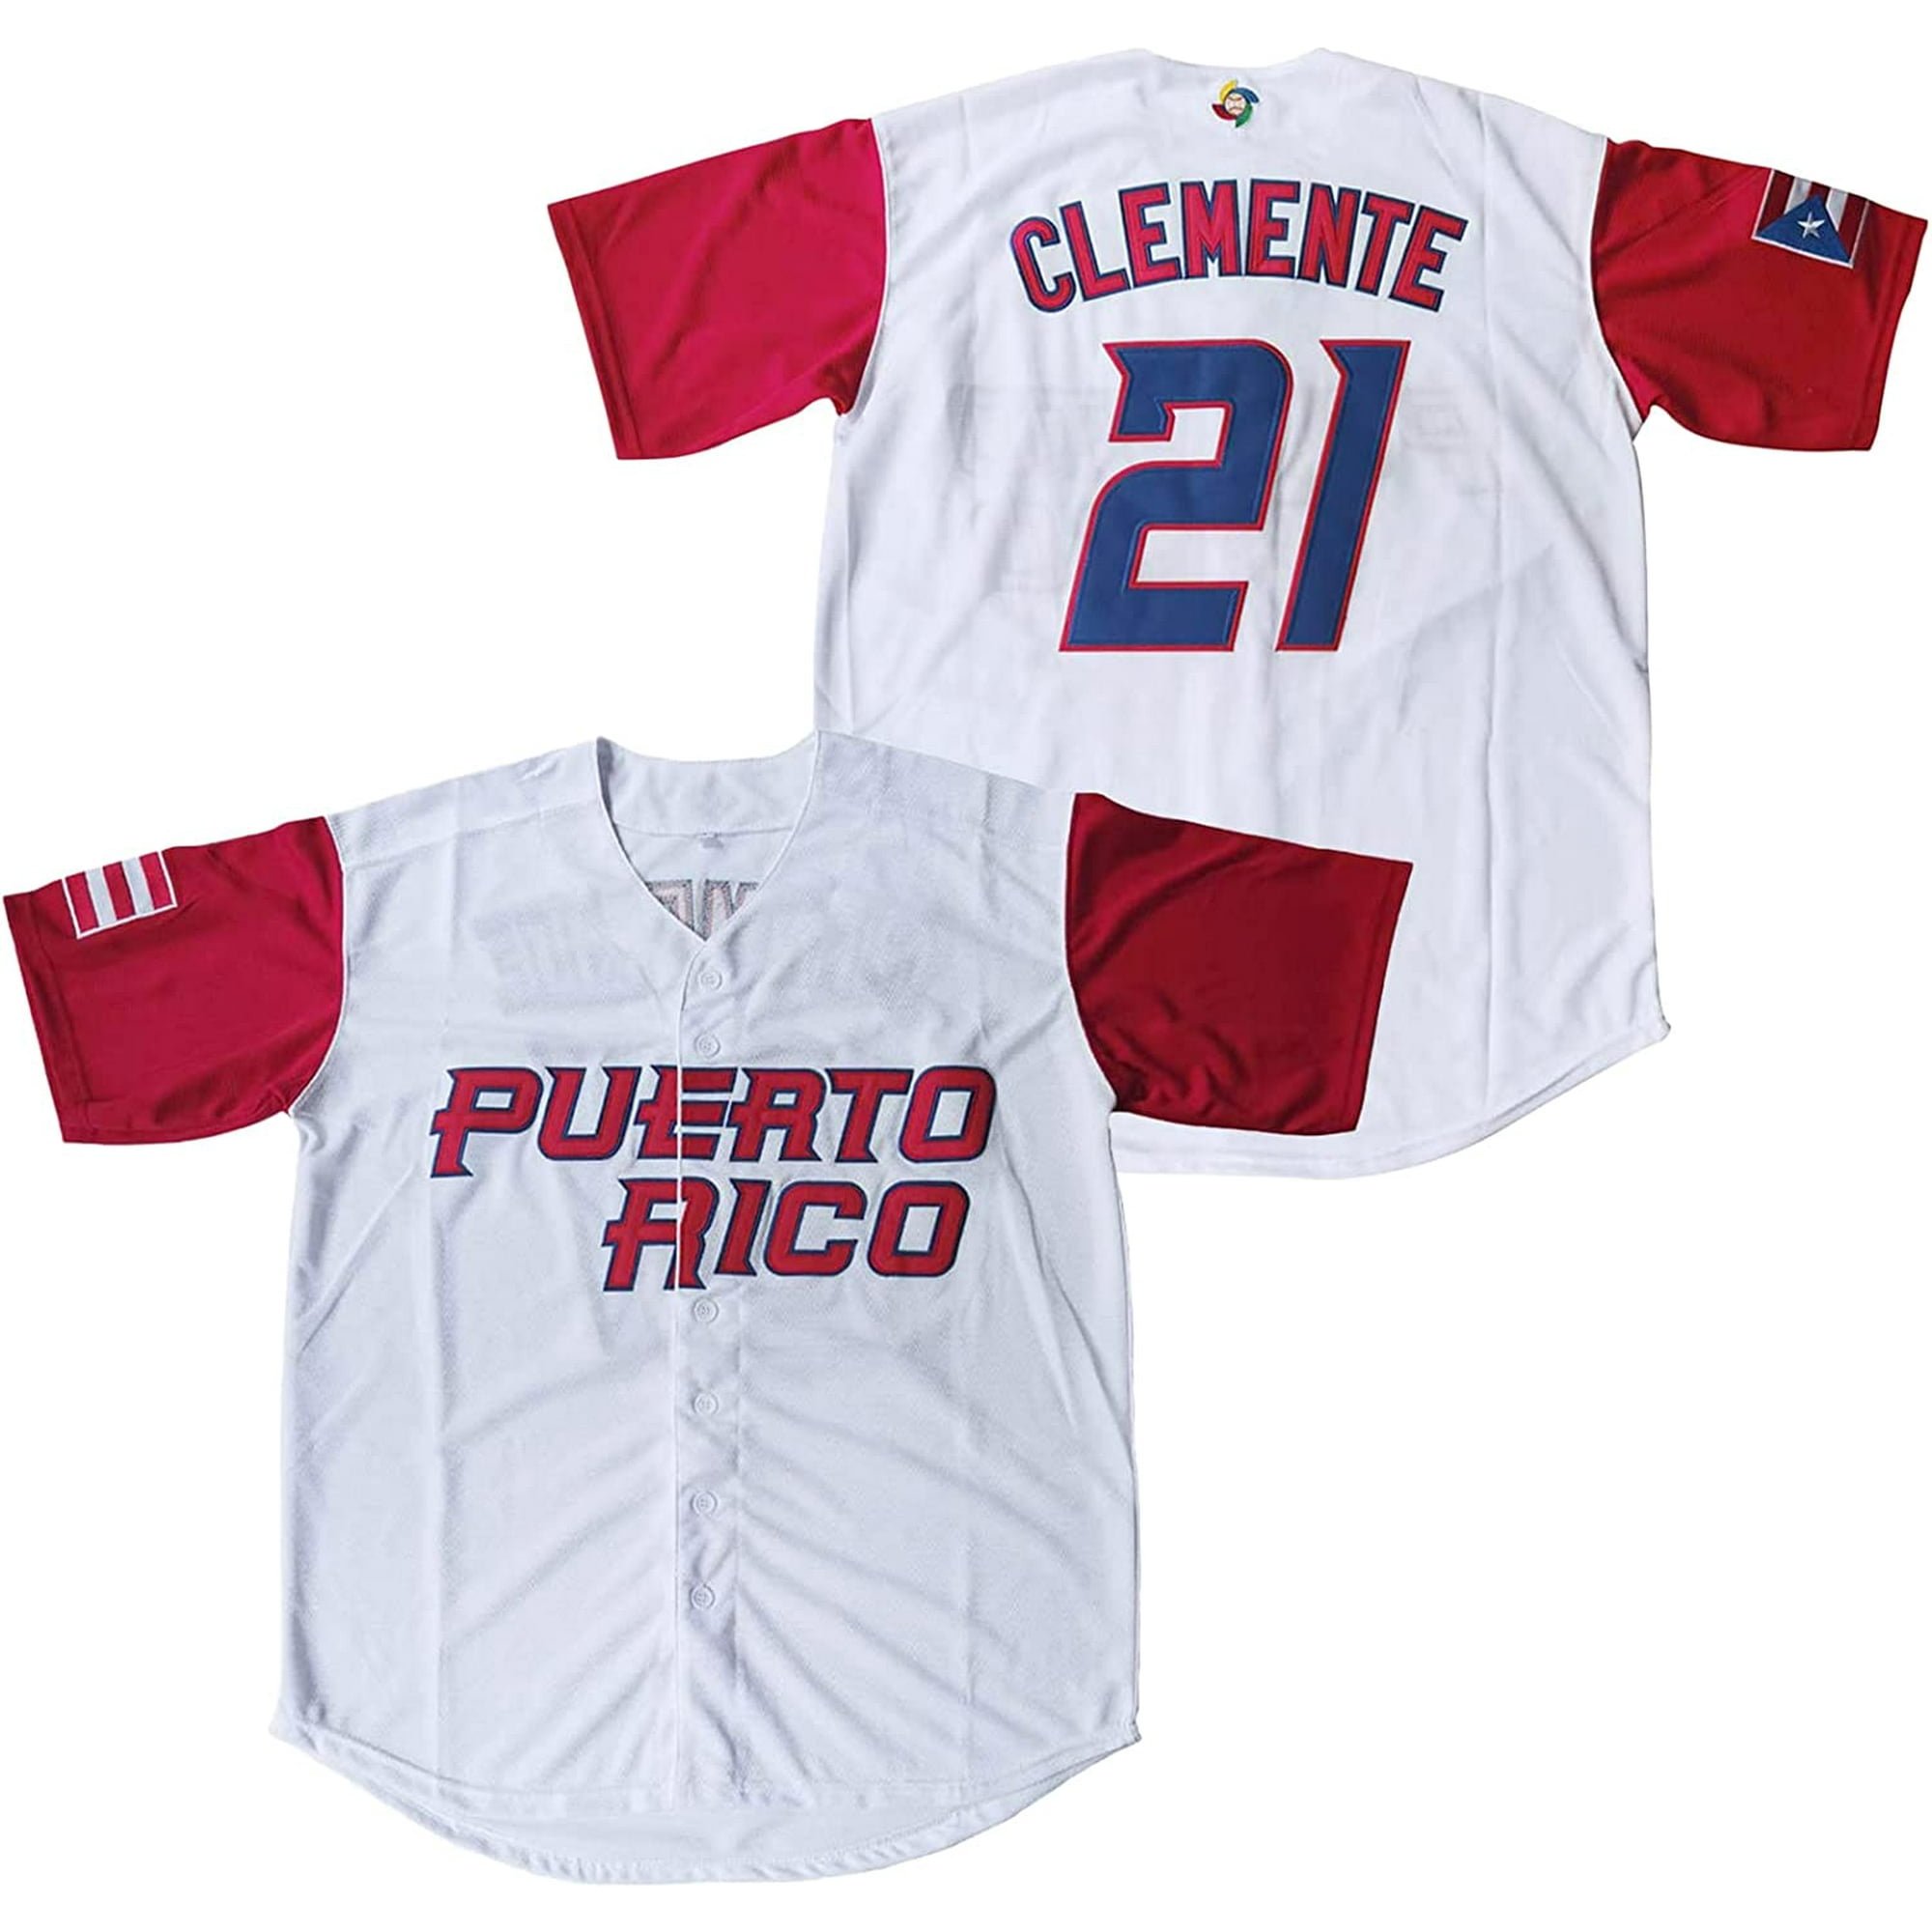 Men's Youth Puerto Rico #21 Clemente Baez #9 Baseball Jersey